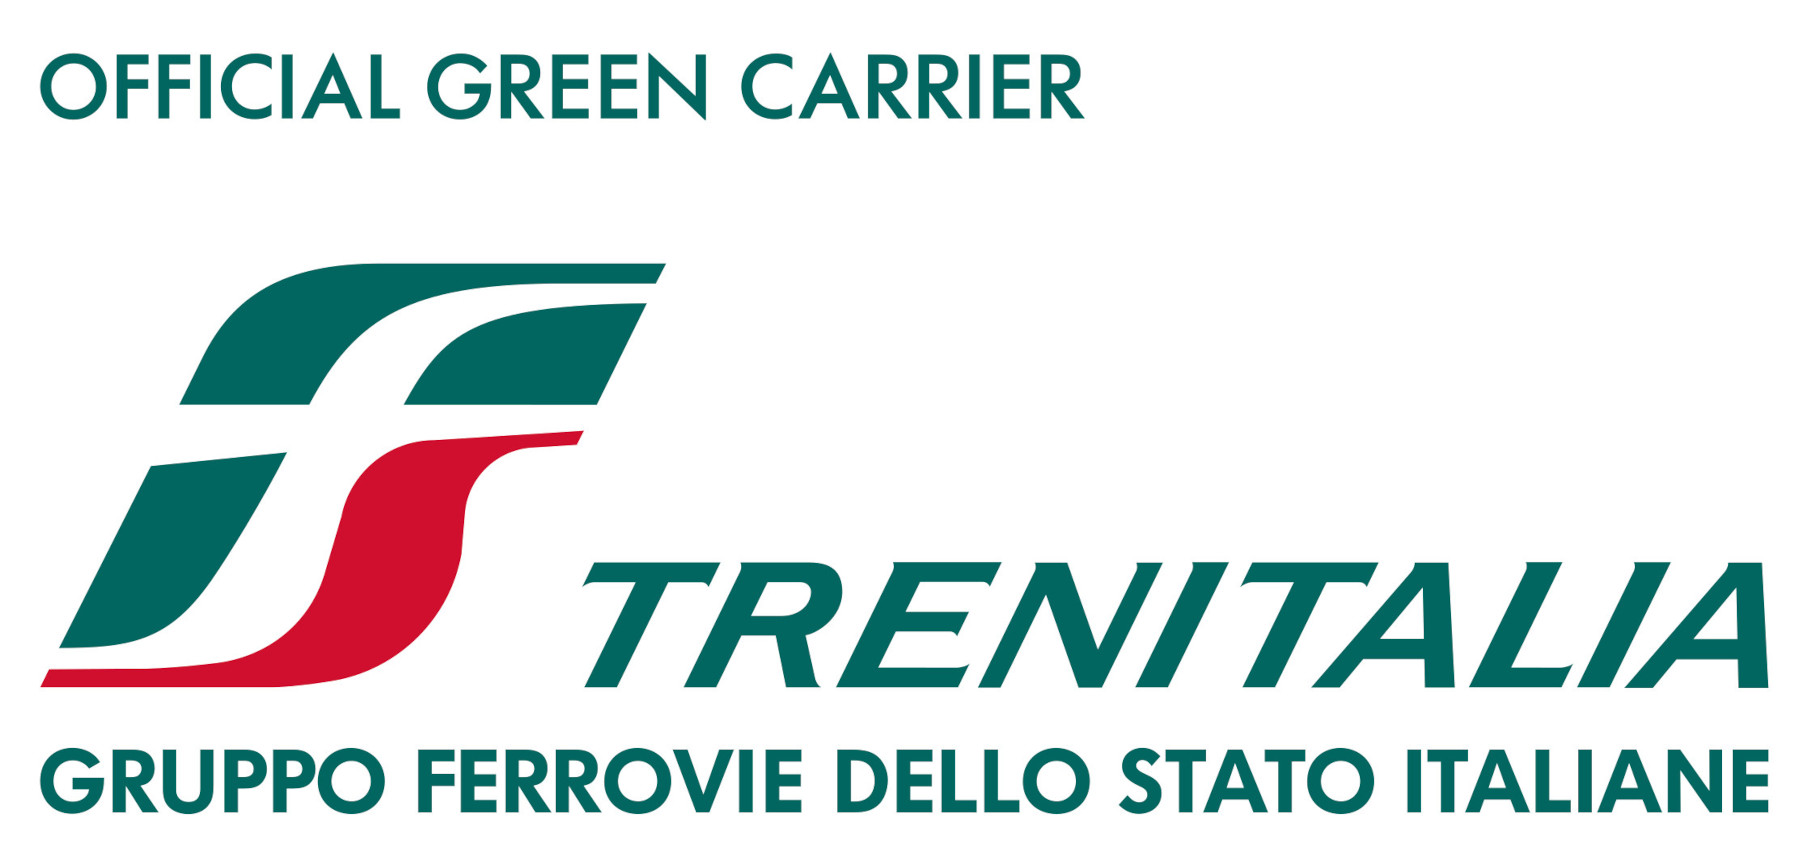 Trenitalia 2023, official green carrier